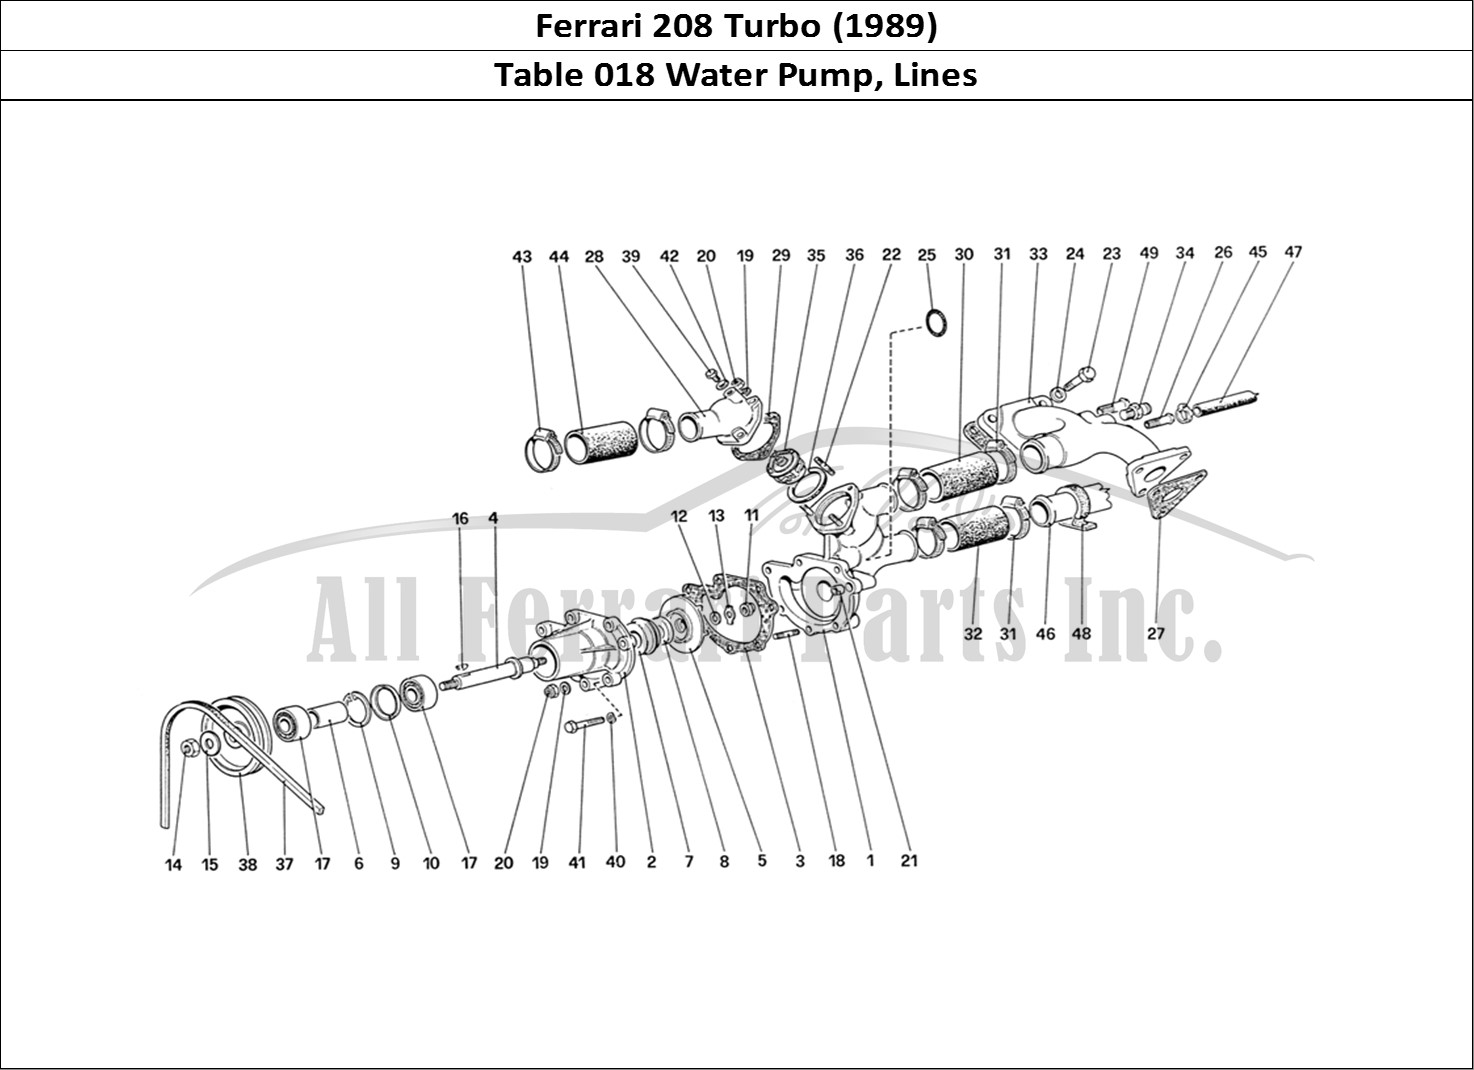 Ferrari Parts Ferrari 208 Turbo (1989) Page 018 Water Pump and Pipings